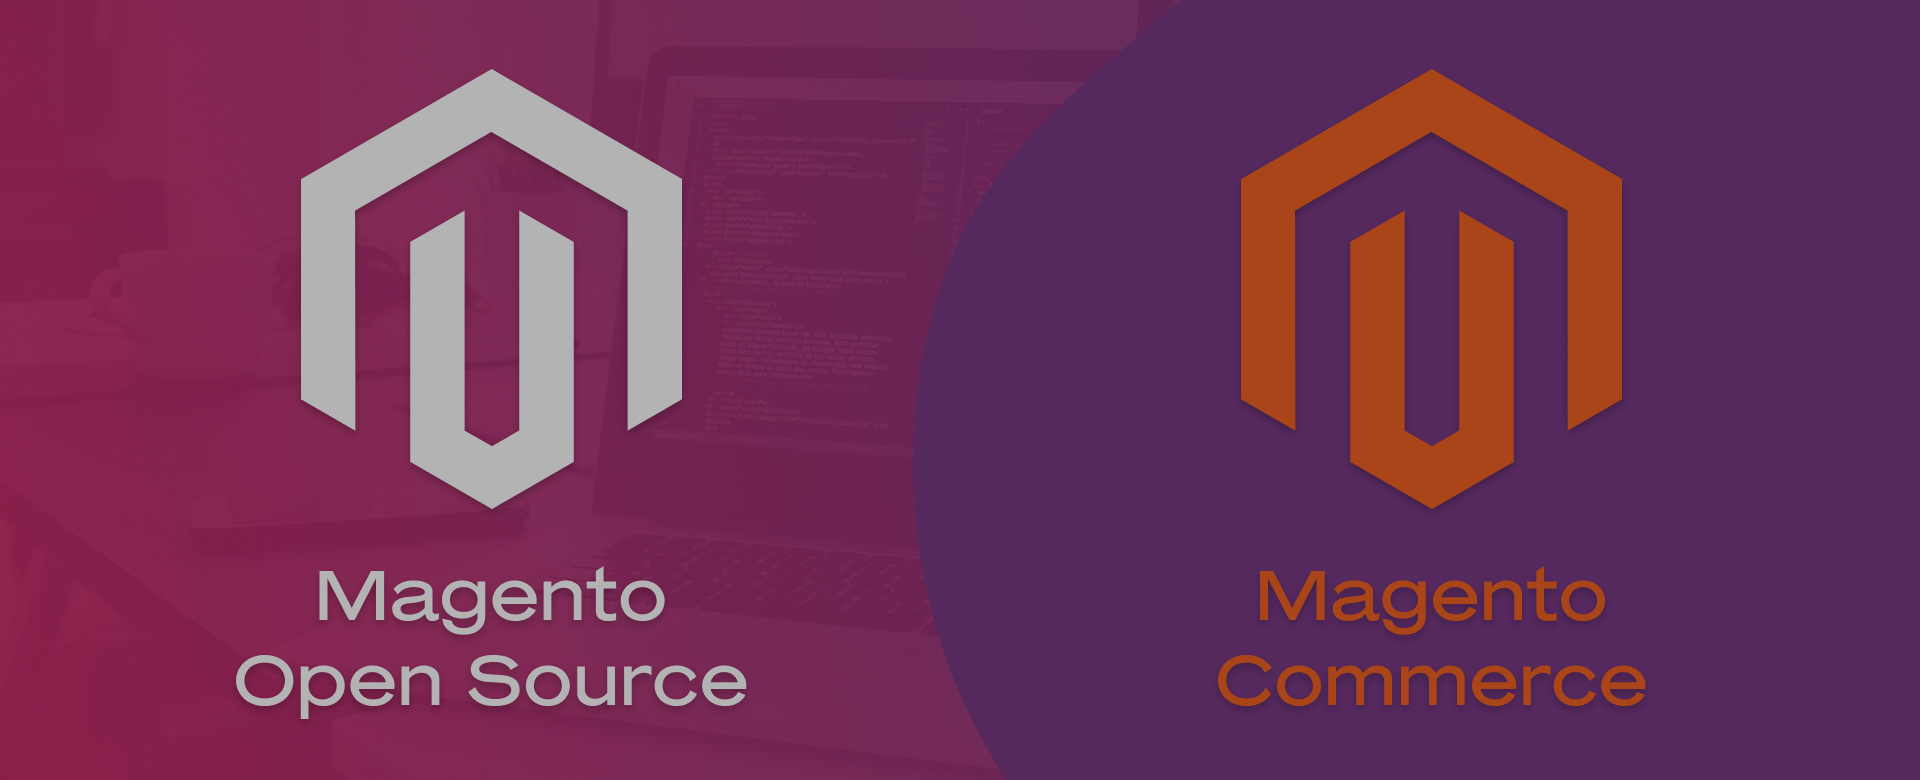 Confronto tra Magento Open Source e Magento Commerce